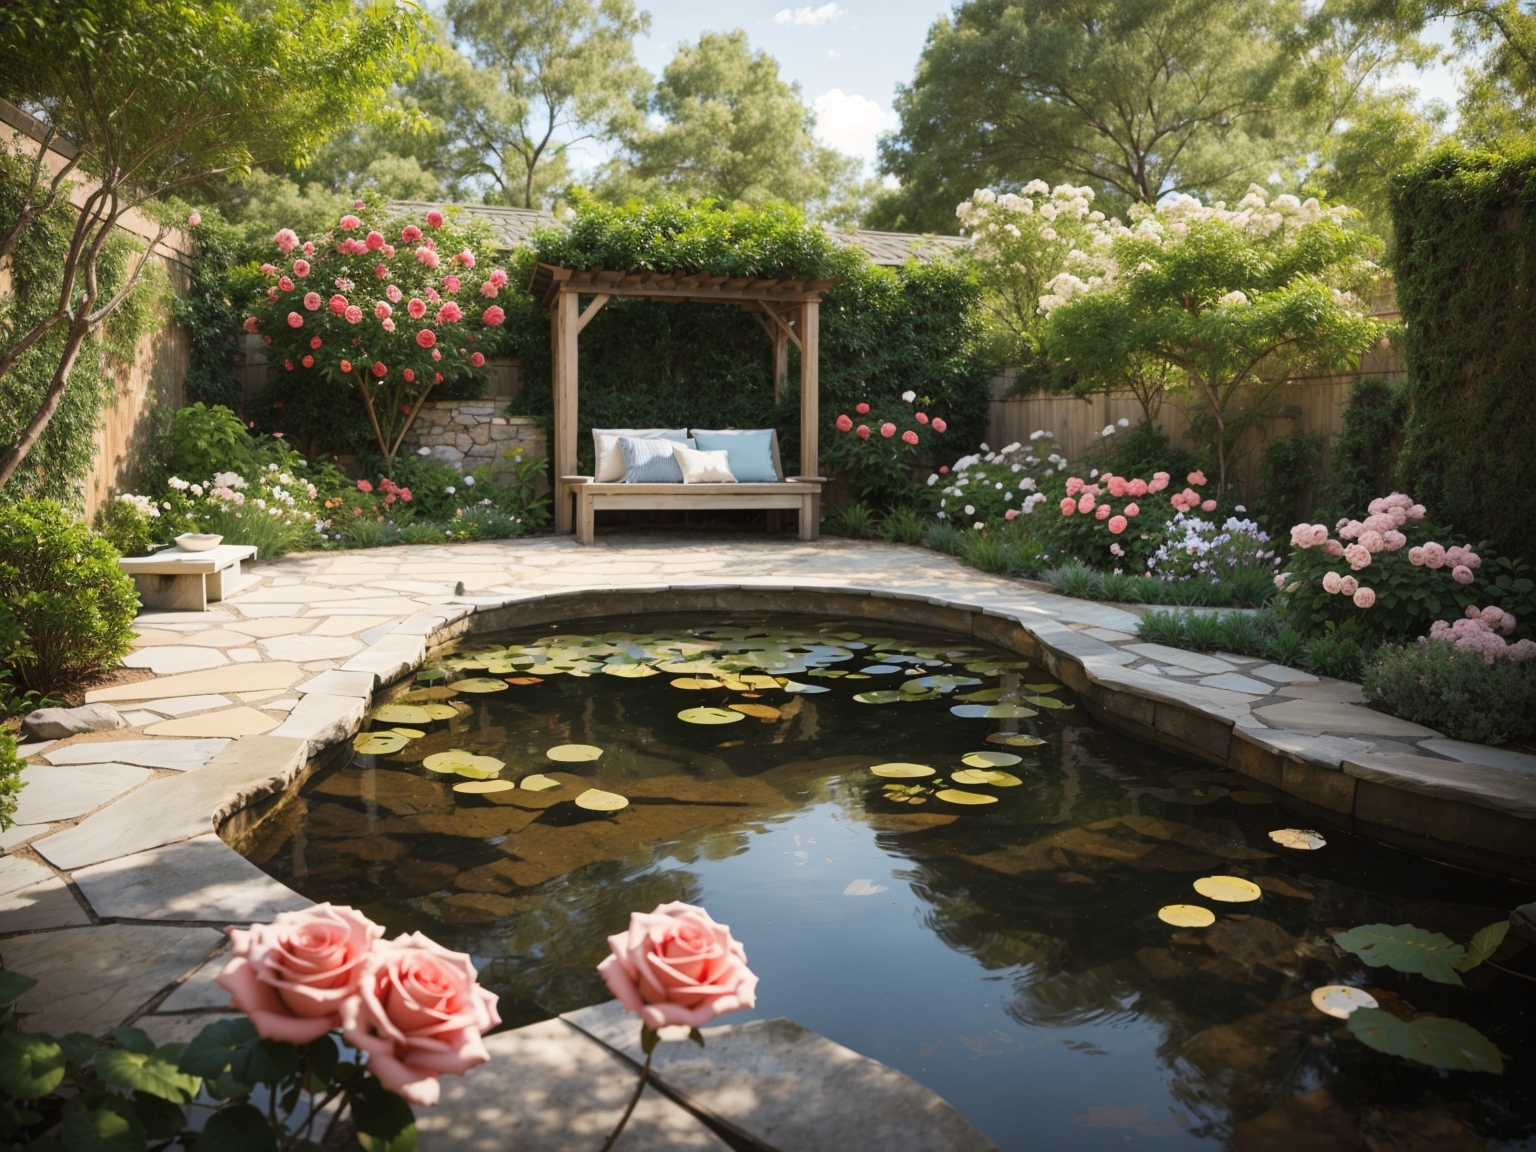 backyard healing garden idea - healing garden idea based on a pond